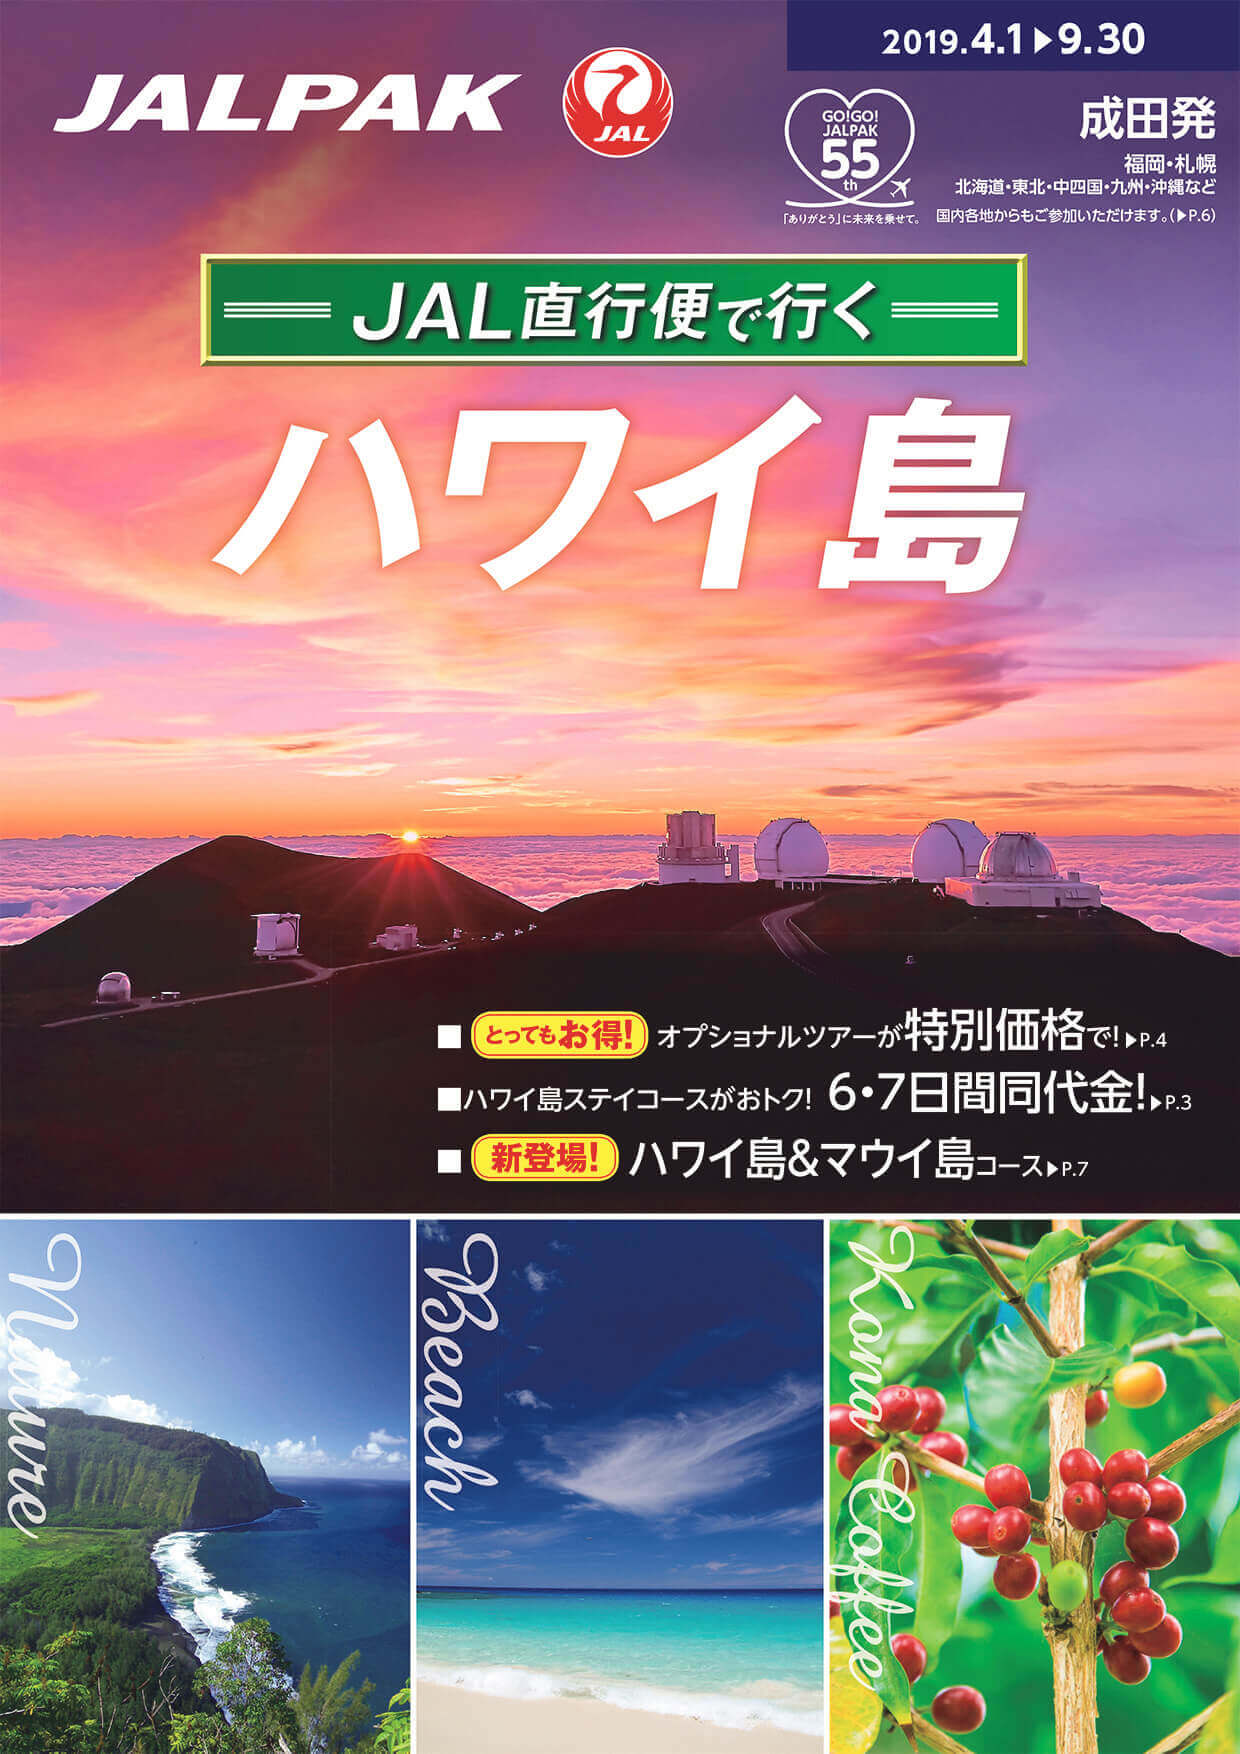 JALPAKツアーの詳細は「J AL直行便で行くハワイ島」 のパンフレットで確認を。